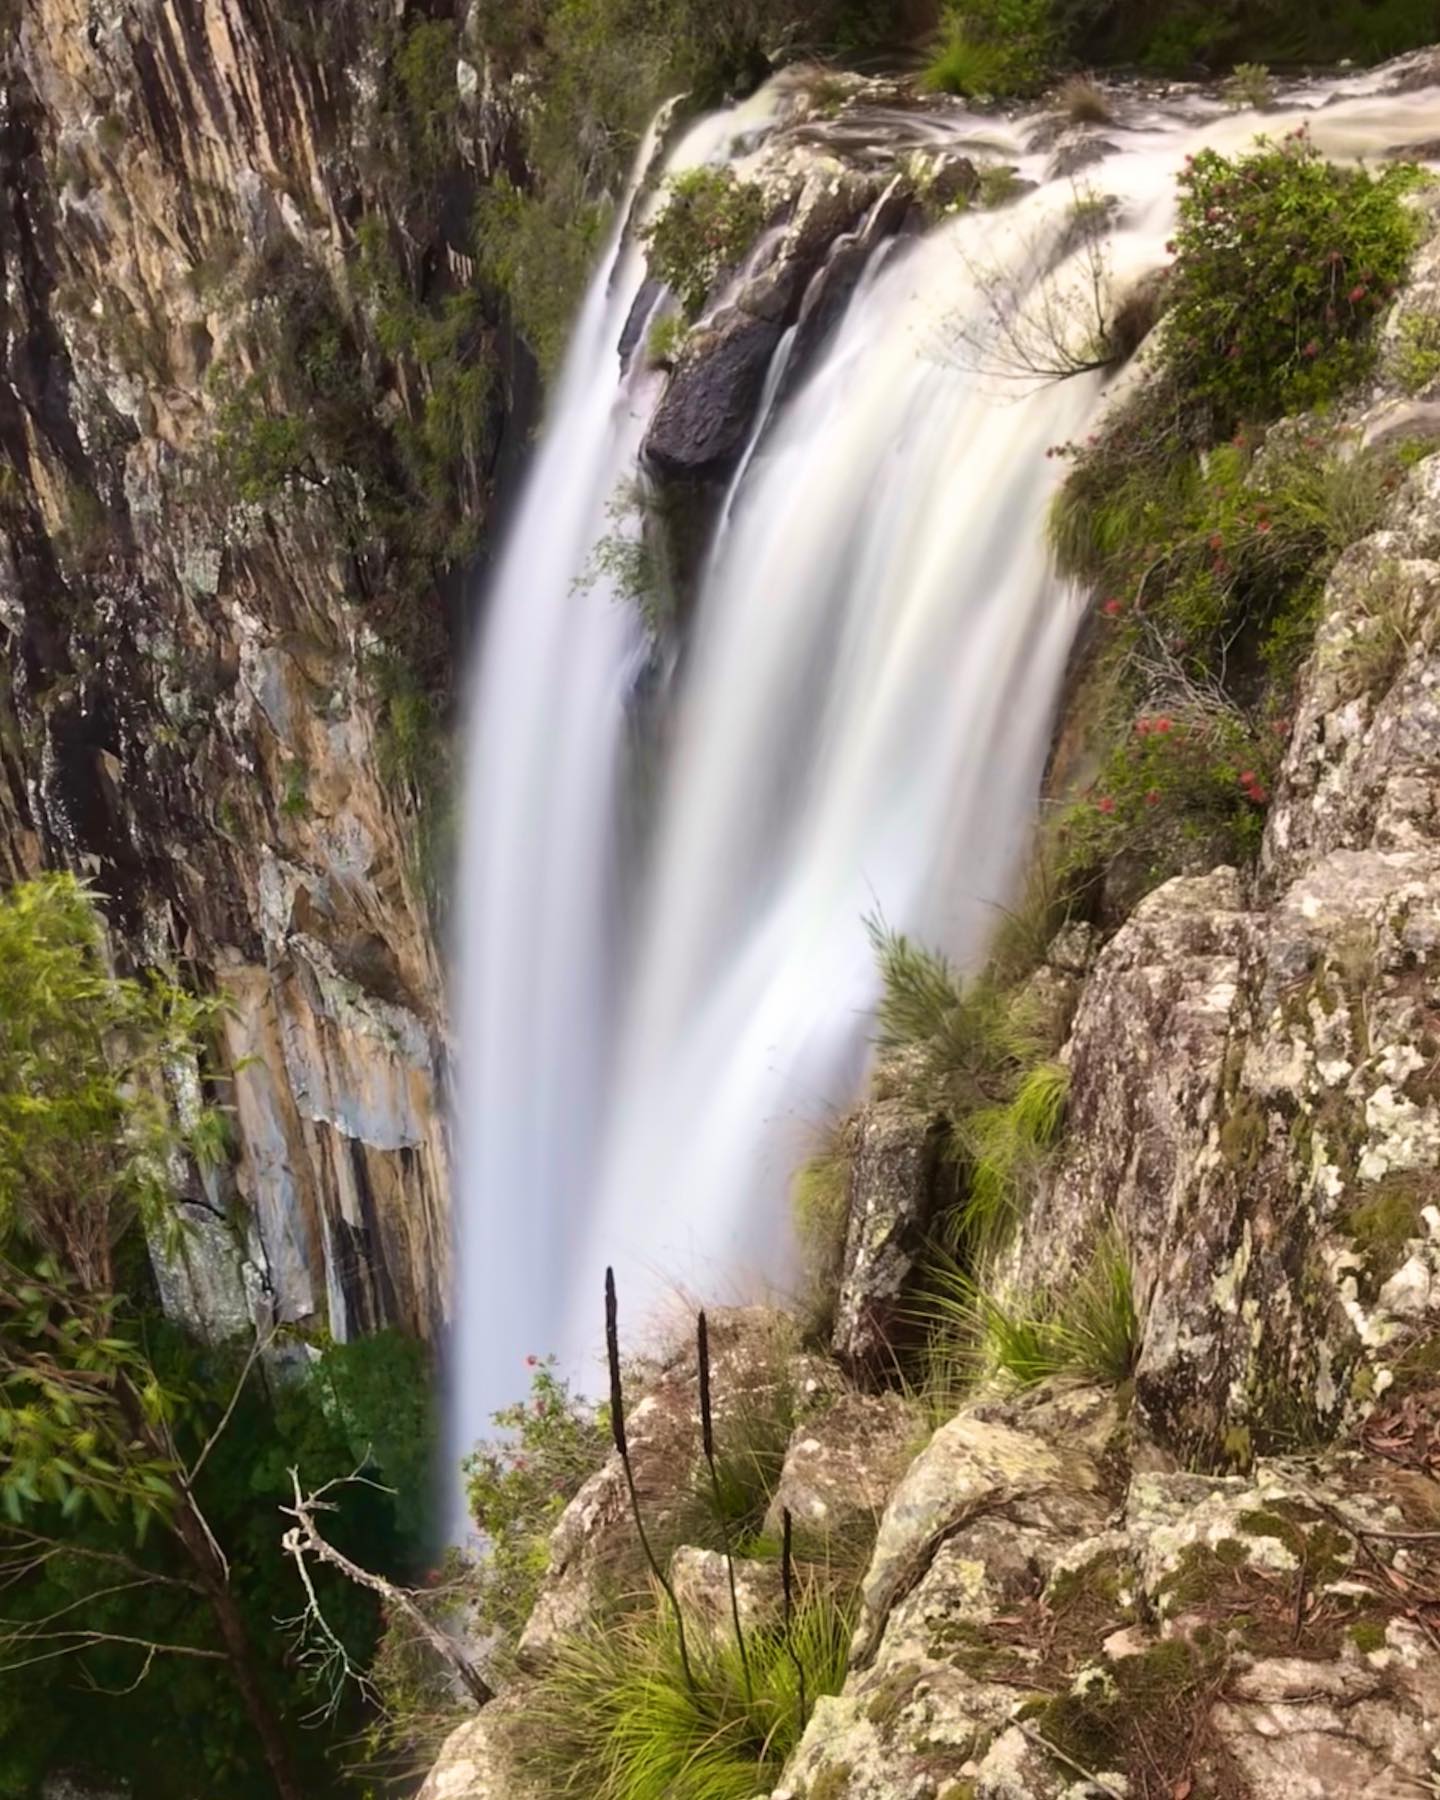 #visitnsw #nswnationalparks #minyonfalls #minyonfallsadventure #waterfallsnsw #roadtrip2020🚘 #camping⛺ #waterfallchasers #waterfallfromthetop #waterfalllovers